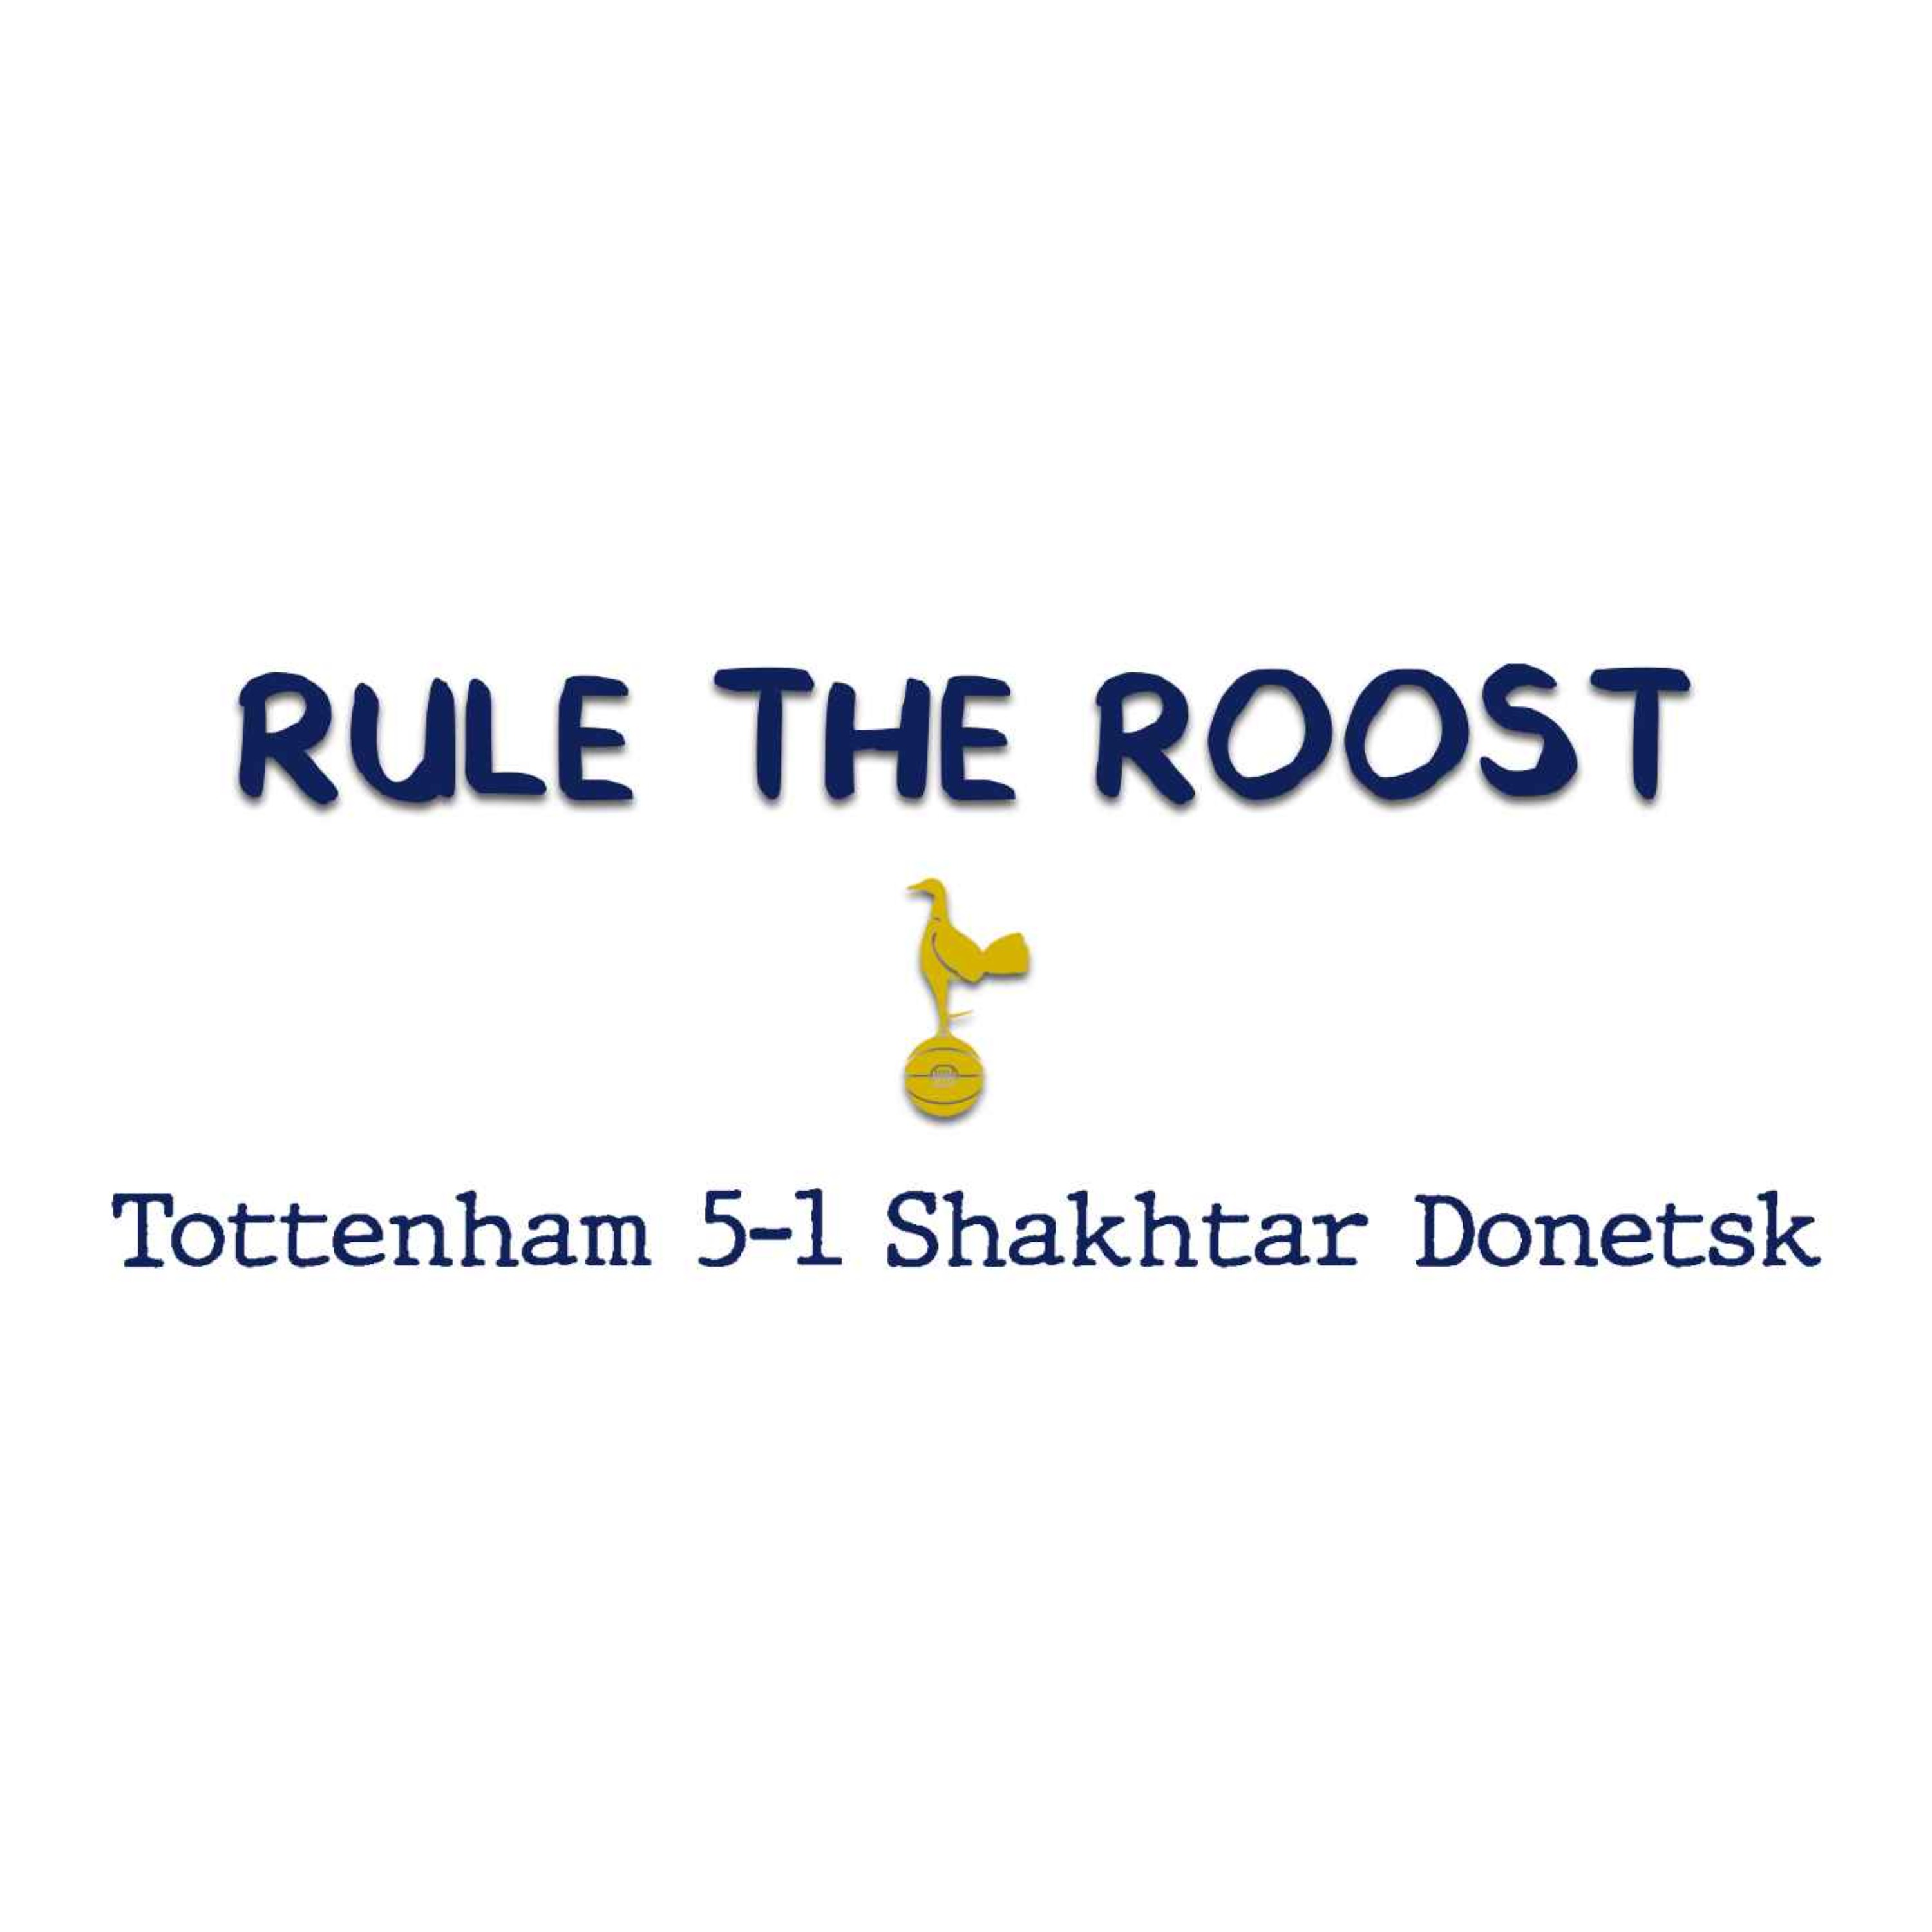 RTR EXTRA: Tottenham 5-1 Shakhtar Donetsk